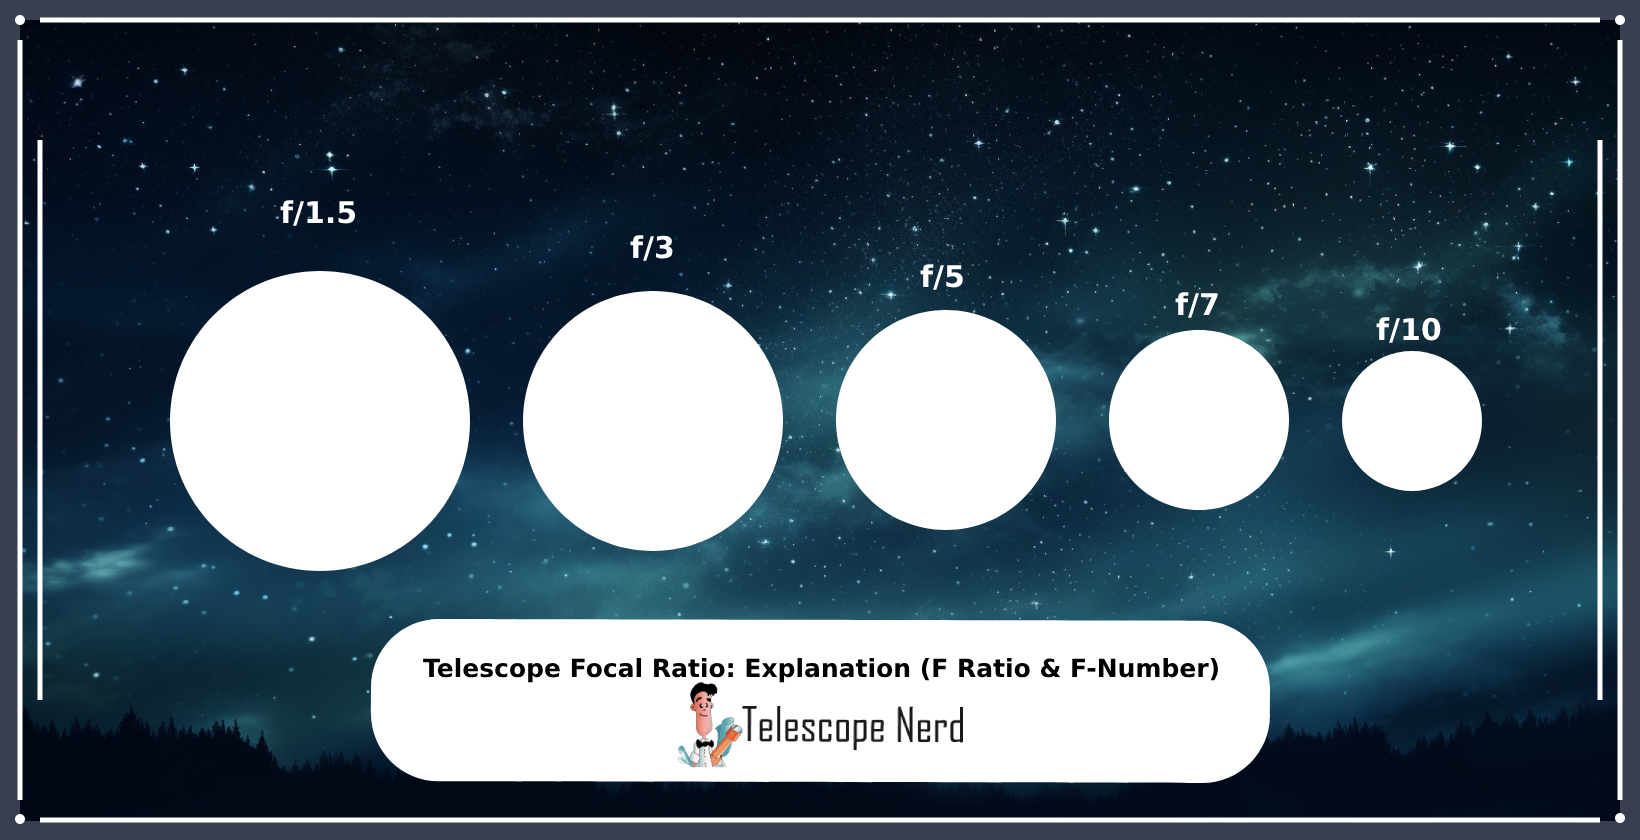 Telescope Focal Ratio: Explanation (F Ratio & F-Number)